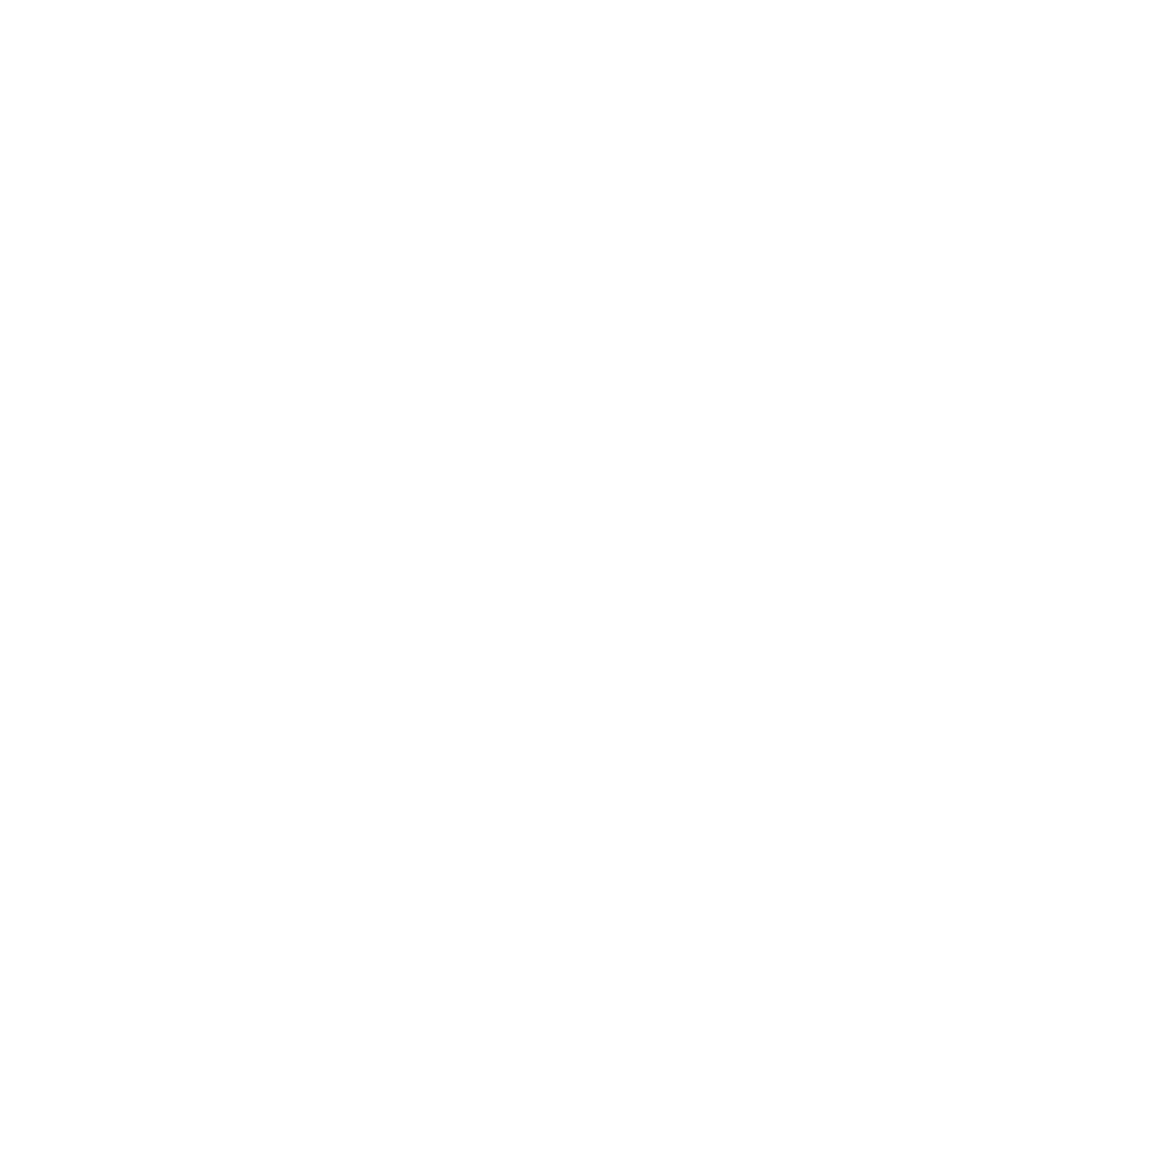 An IEH company logo